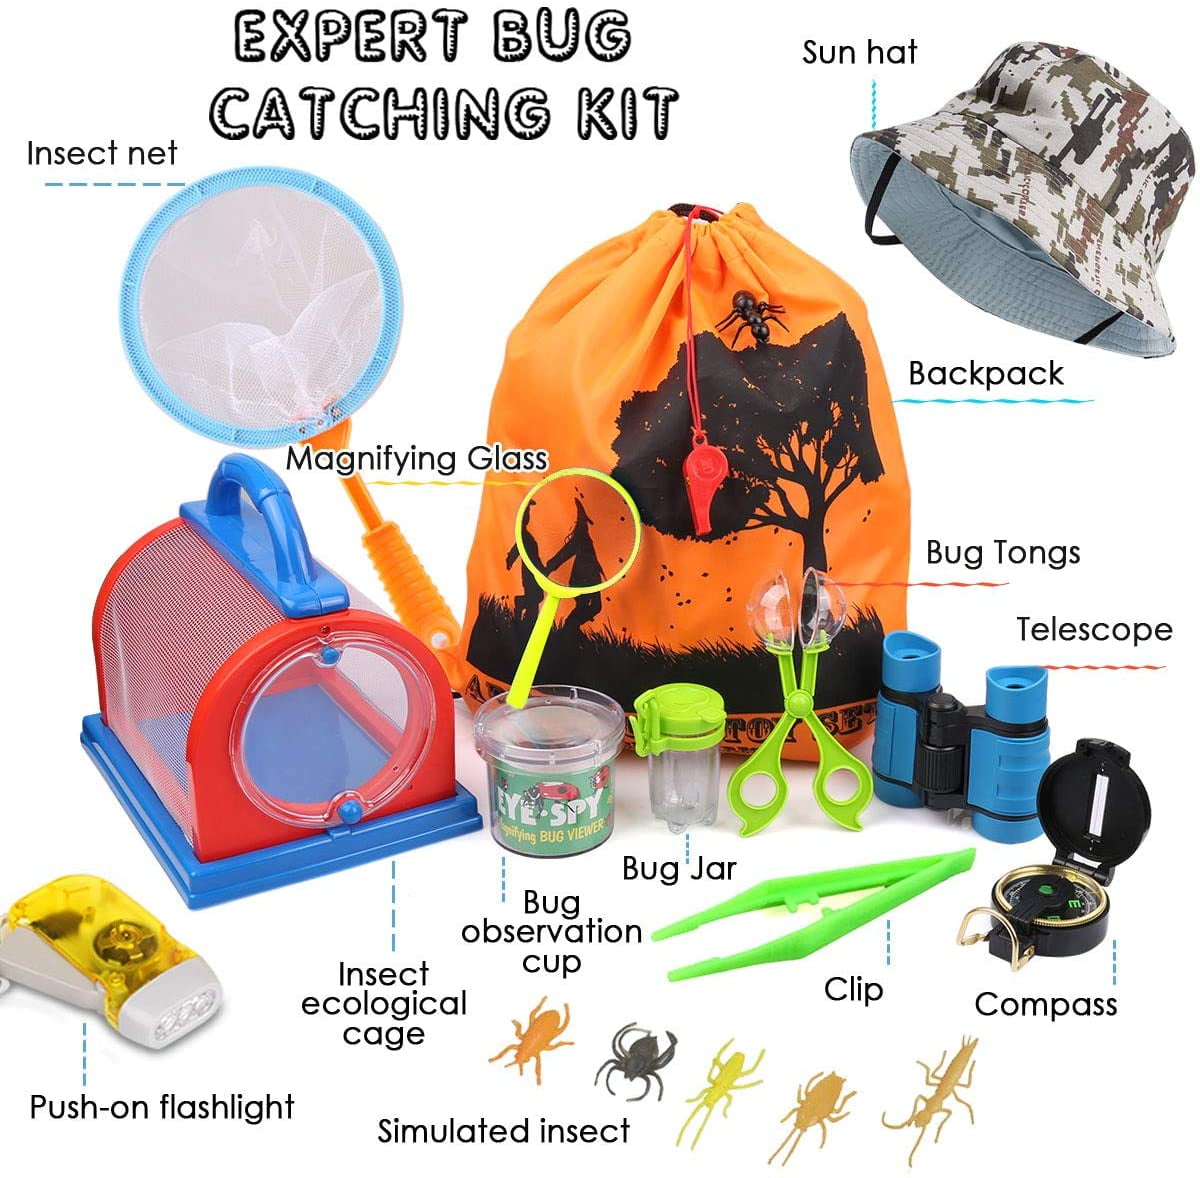 Butterfly Net Catcher Bug Catcher Backpack Bug Viewer with Magnifier Jollysweets Outdoor Exploration Kit 16 Pcs Set Binoculars,Boy and Girl Explorer Kit. 